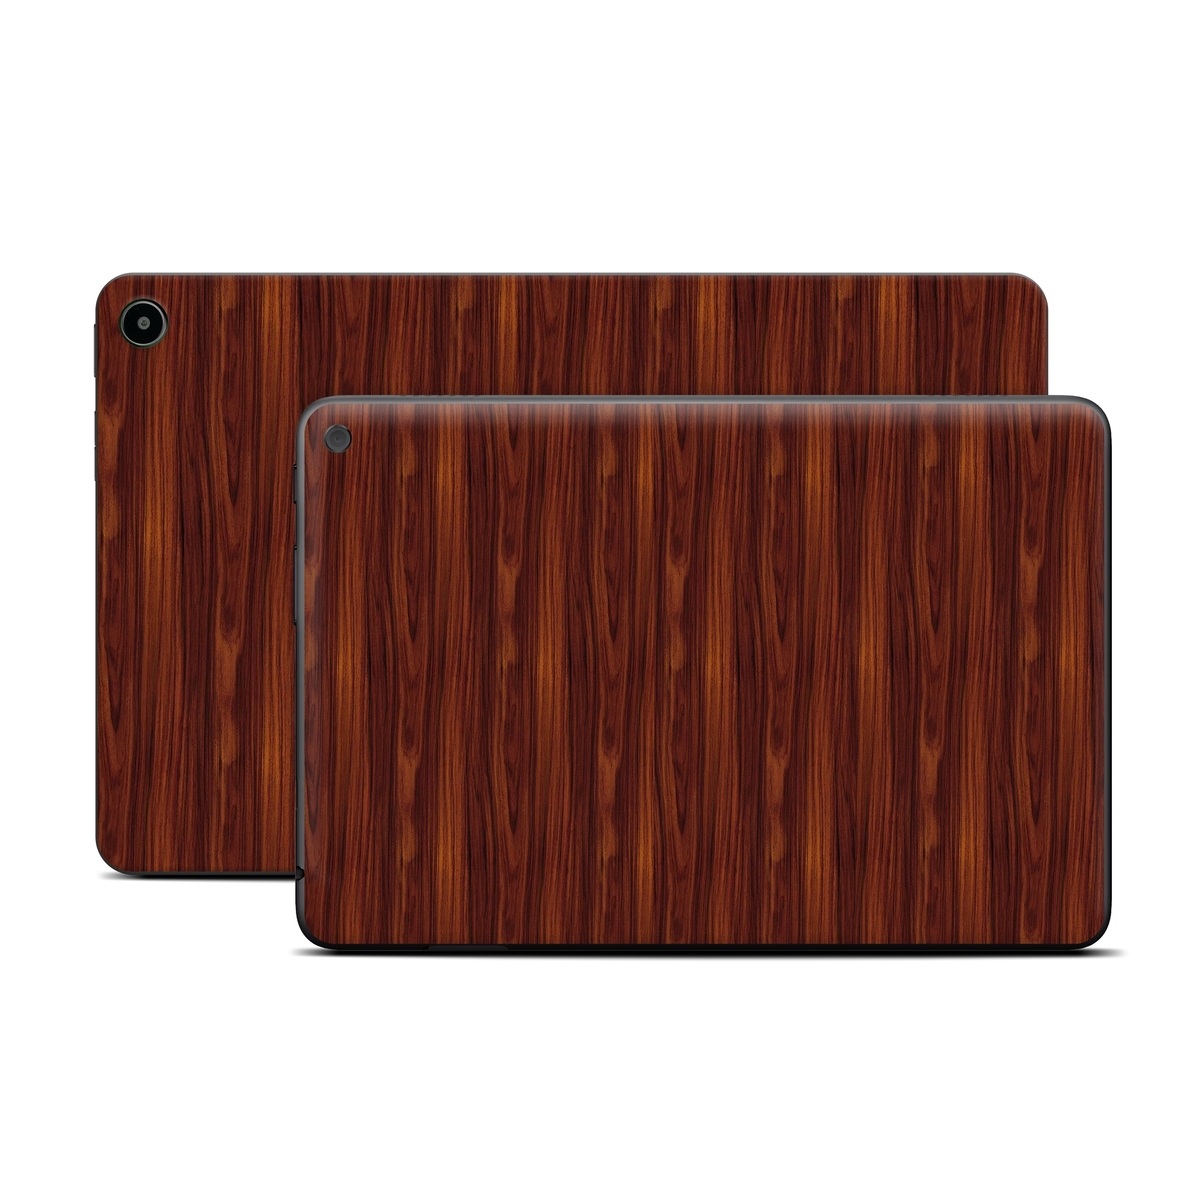 Amazon Fire Tablet Series Skin Skin design of Wood, Red, Brown, Hardwood, Wood flooring, Wood stain, Caramel color, Laminate flooring, Flooring, Varnish, with black, red colors